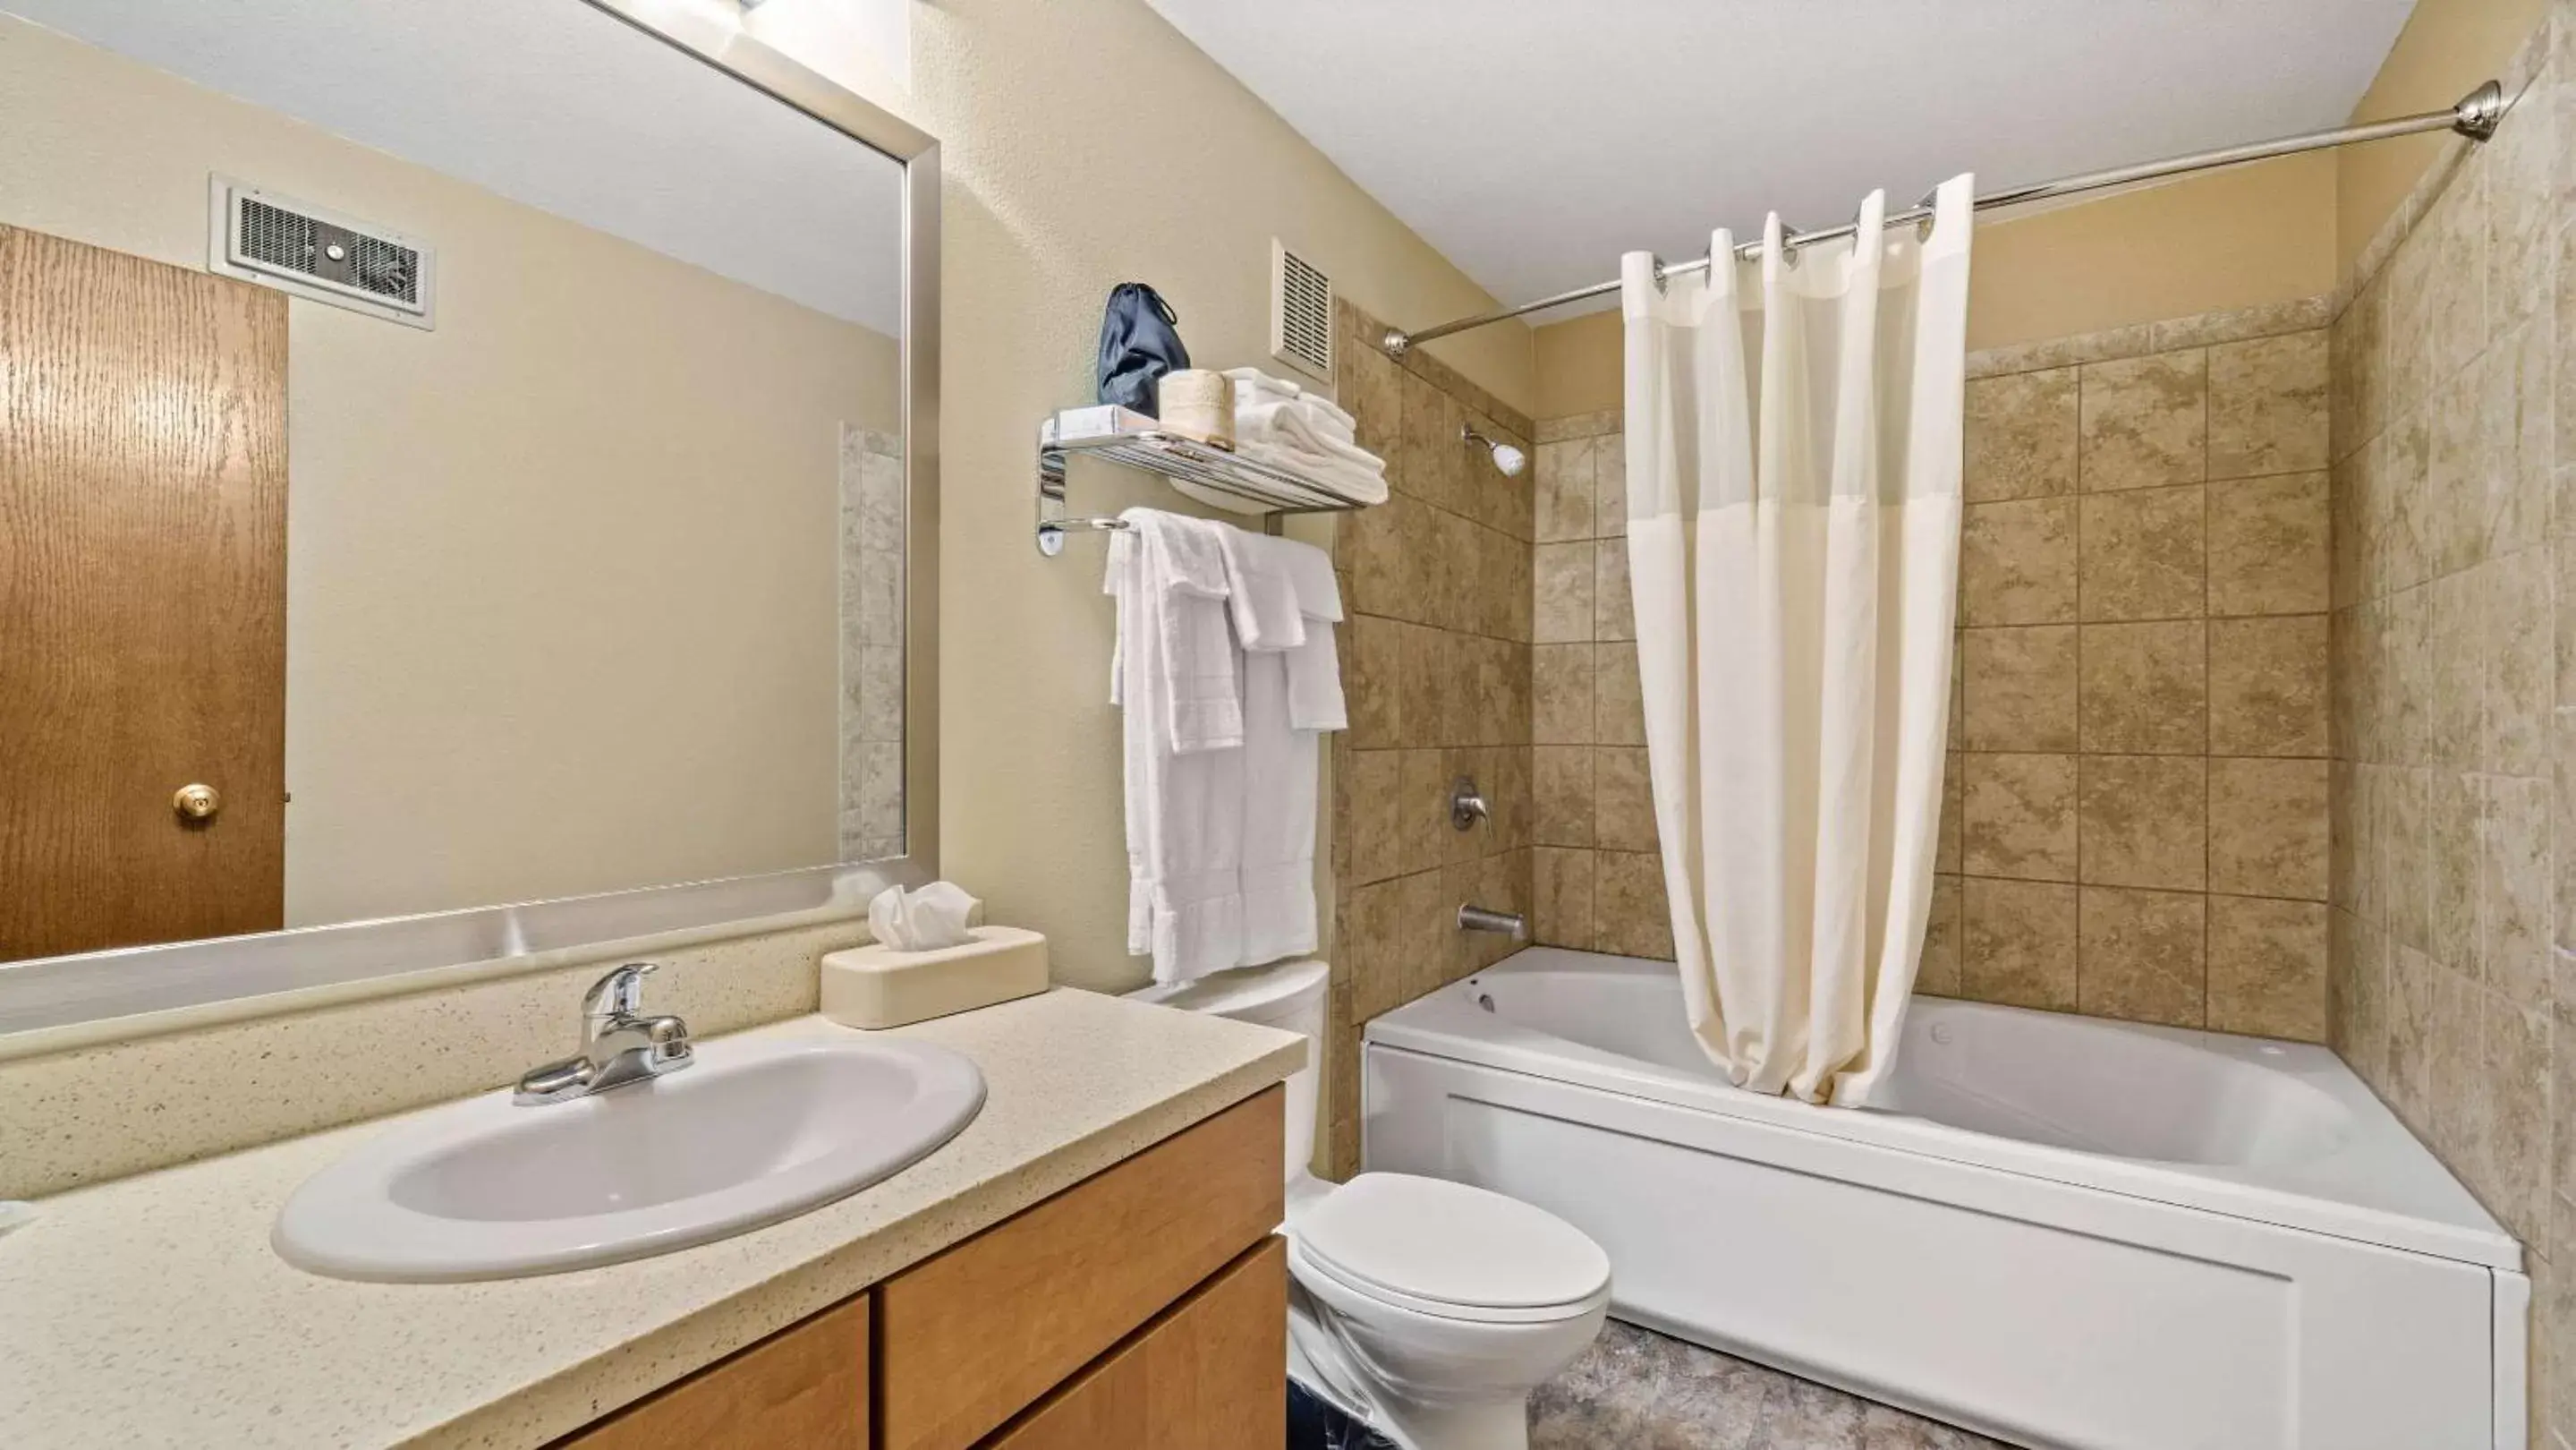 Bedroom, Bathroom in Clarion Hotel & Suites Fairbanks near Ft. Wainwright